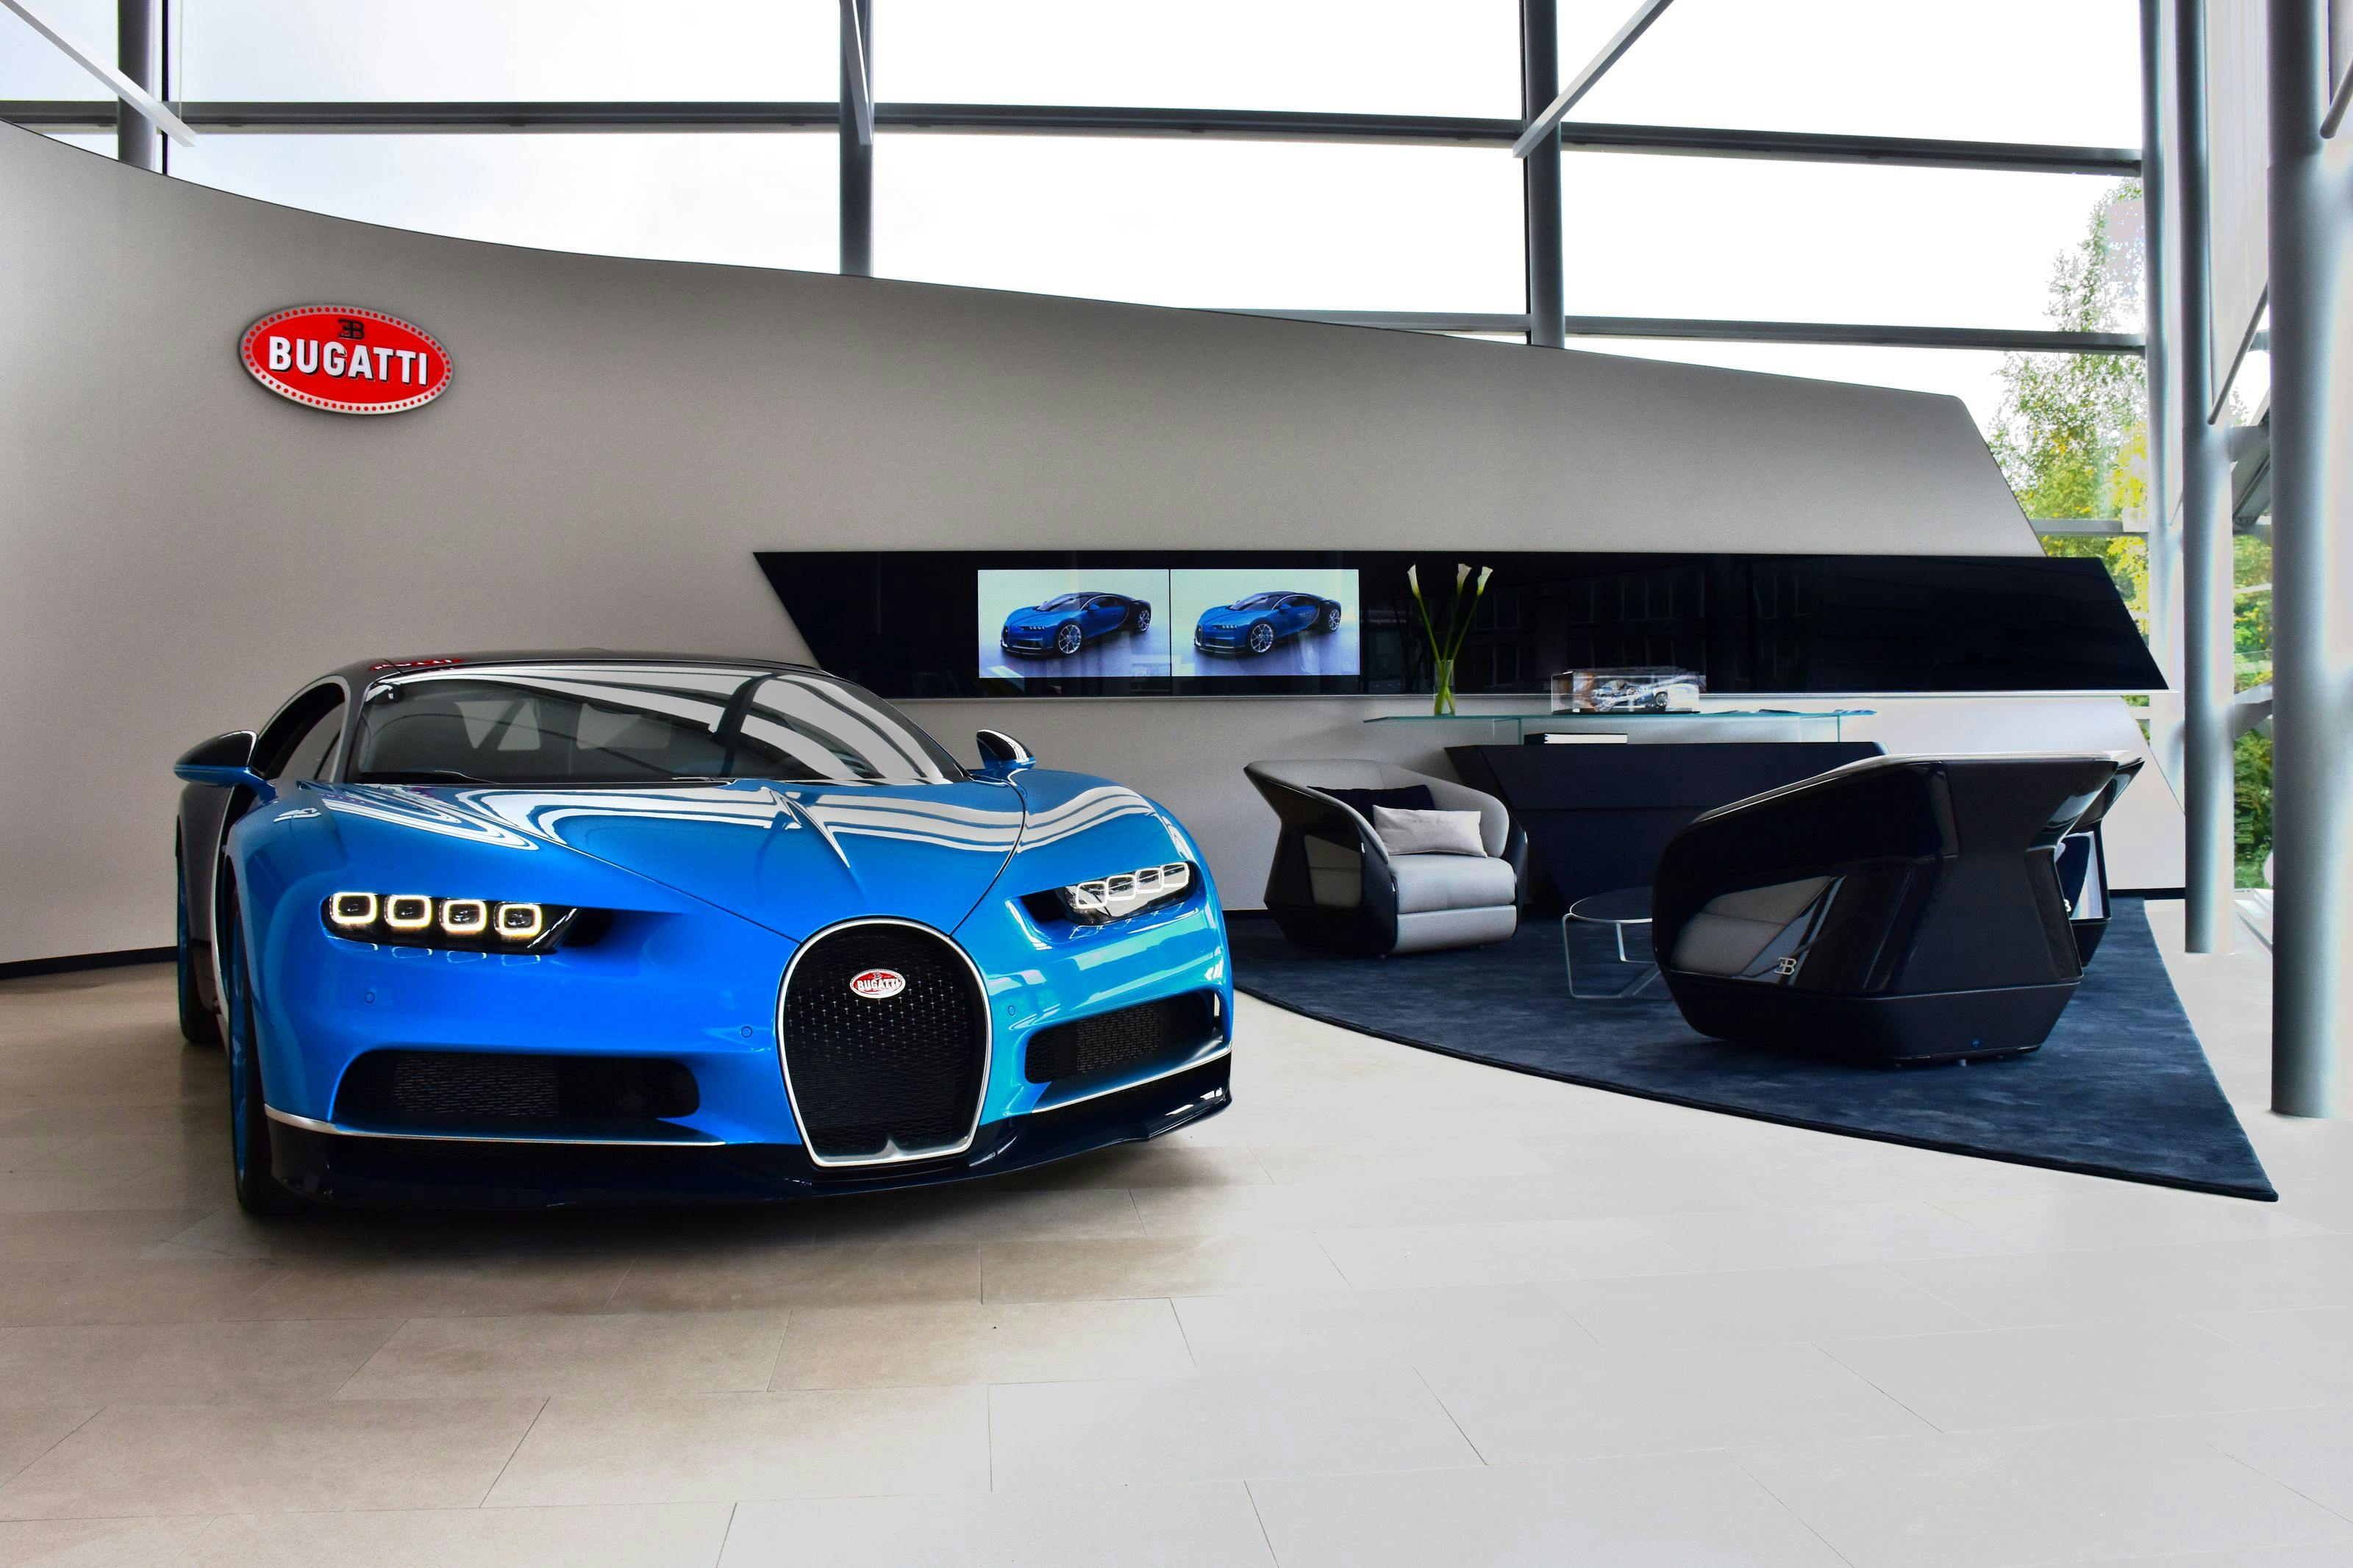 Bugatti showroom in Zurich opens with new brand design